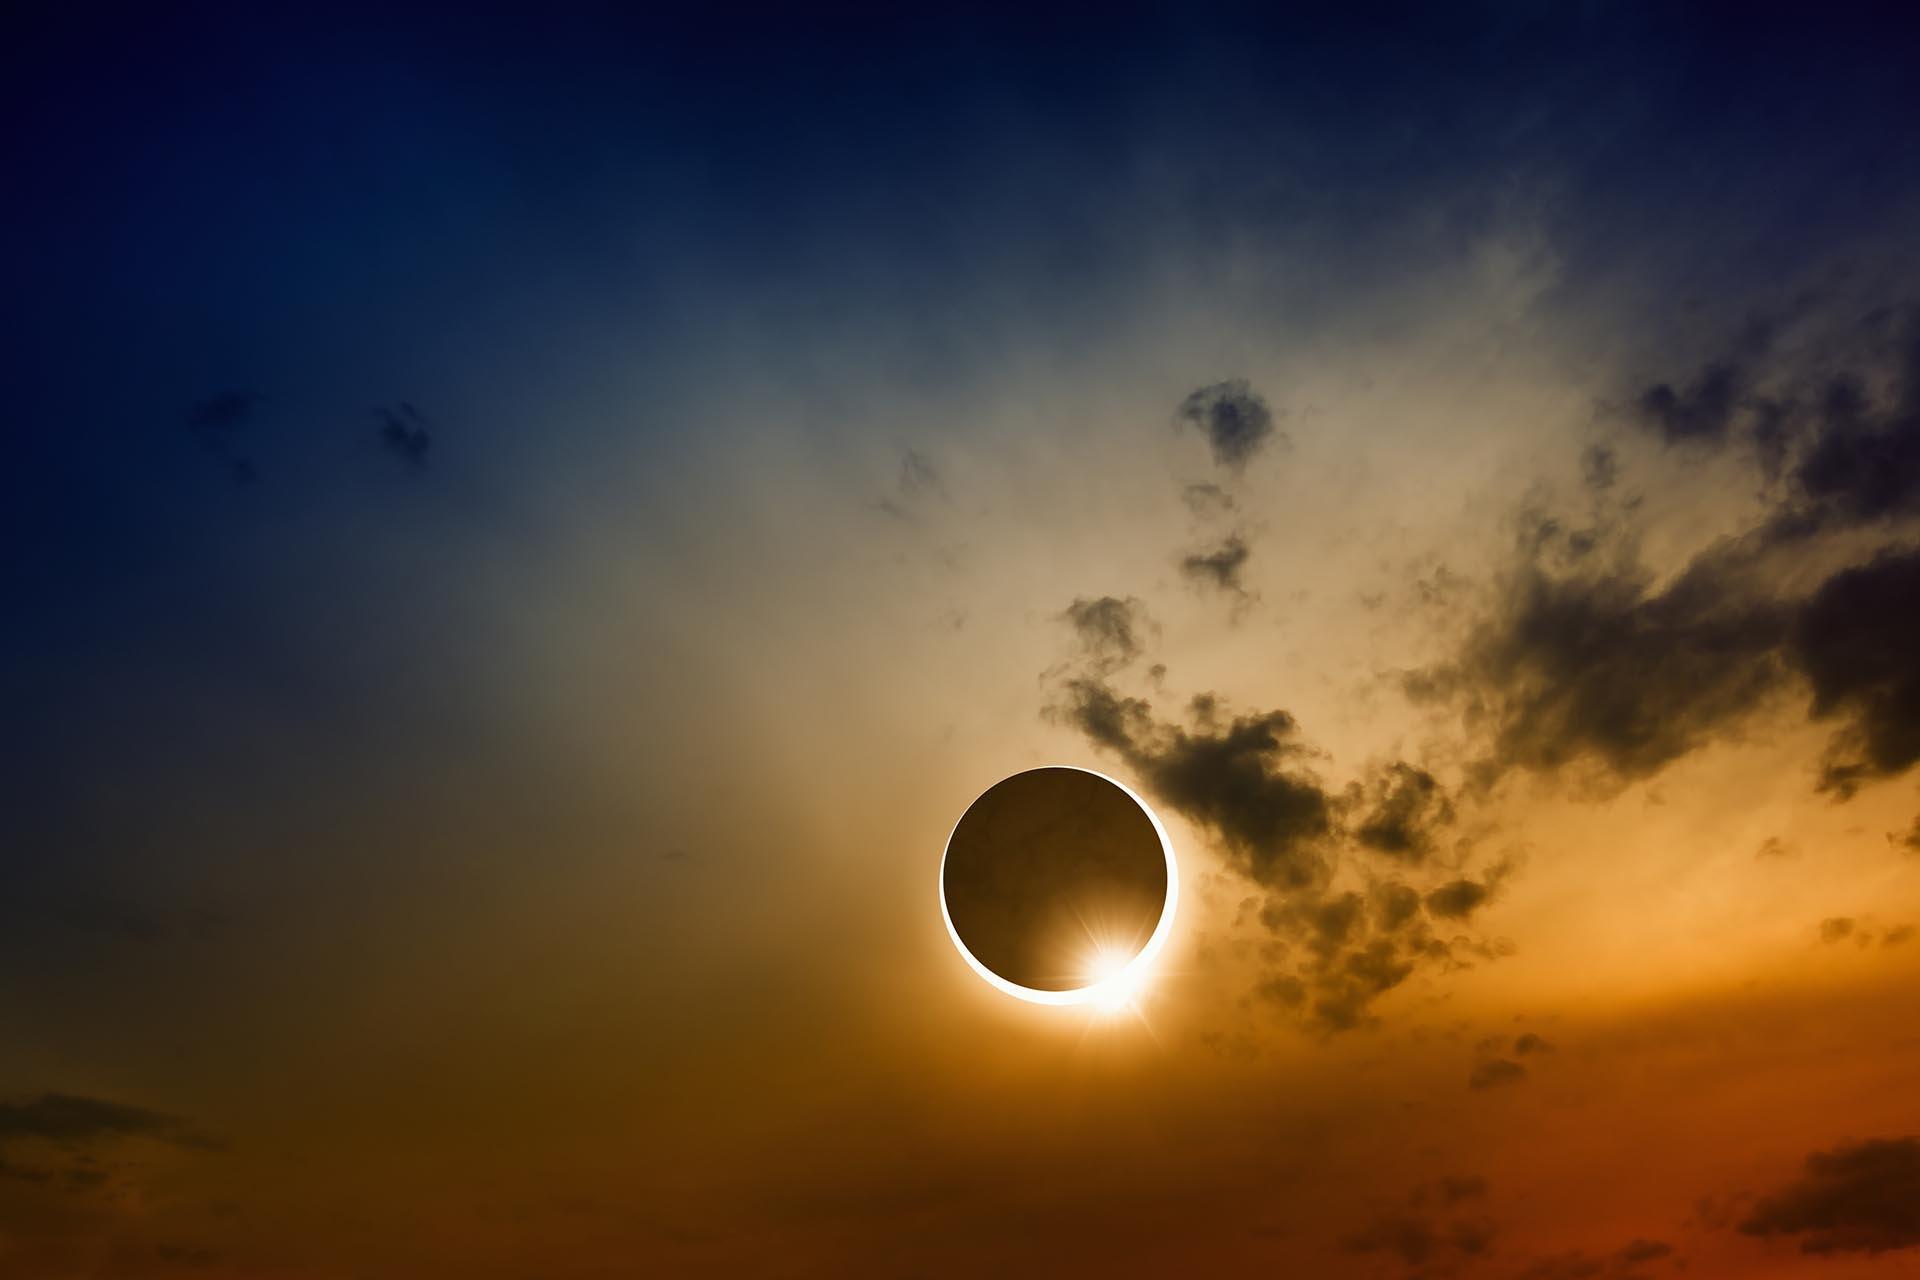 A full solar eclipse